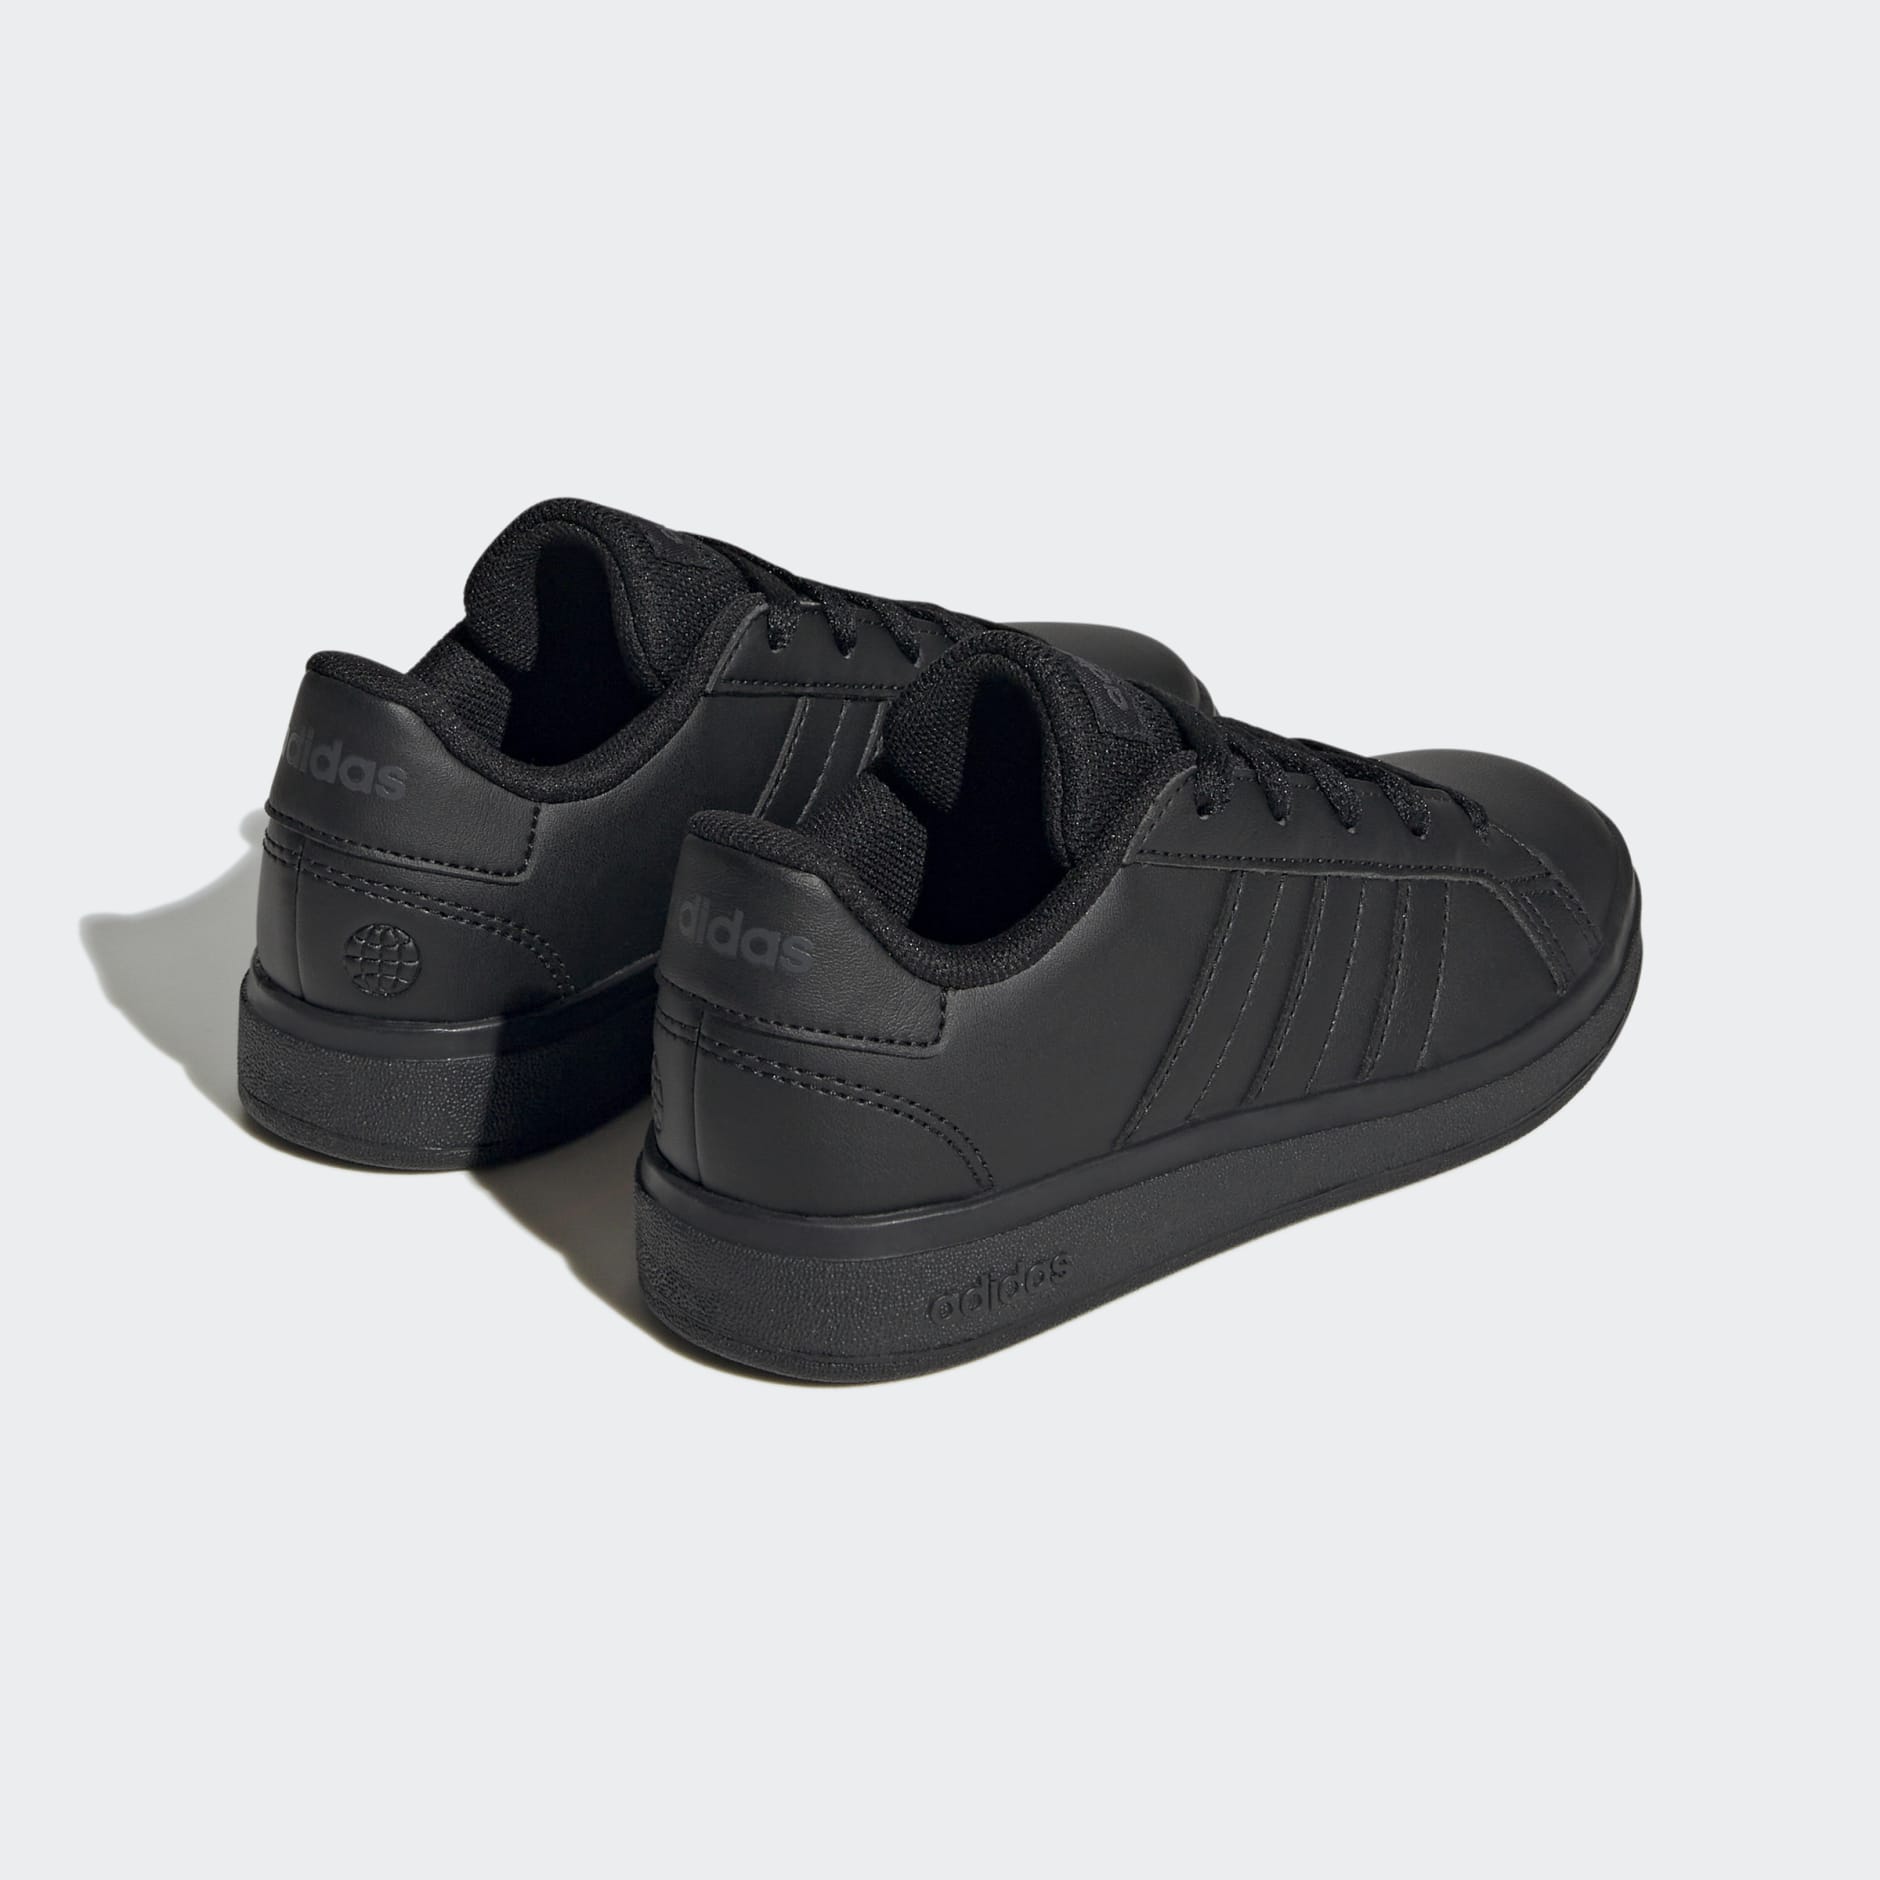 Shoes - Grand Court Lifestyle Tennis Lace-Up Shoes - Black | adidas ...